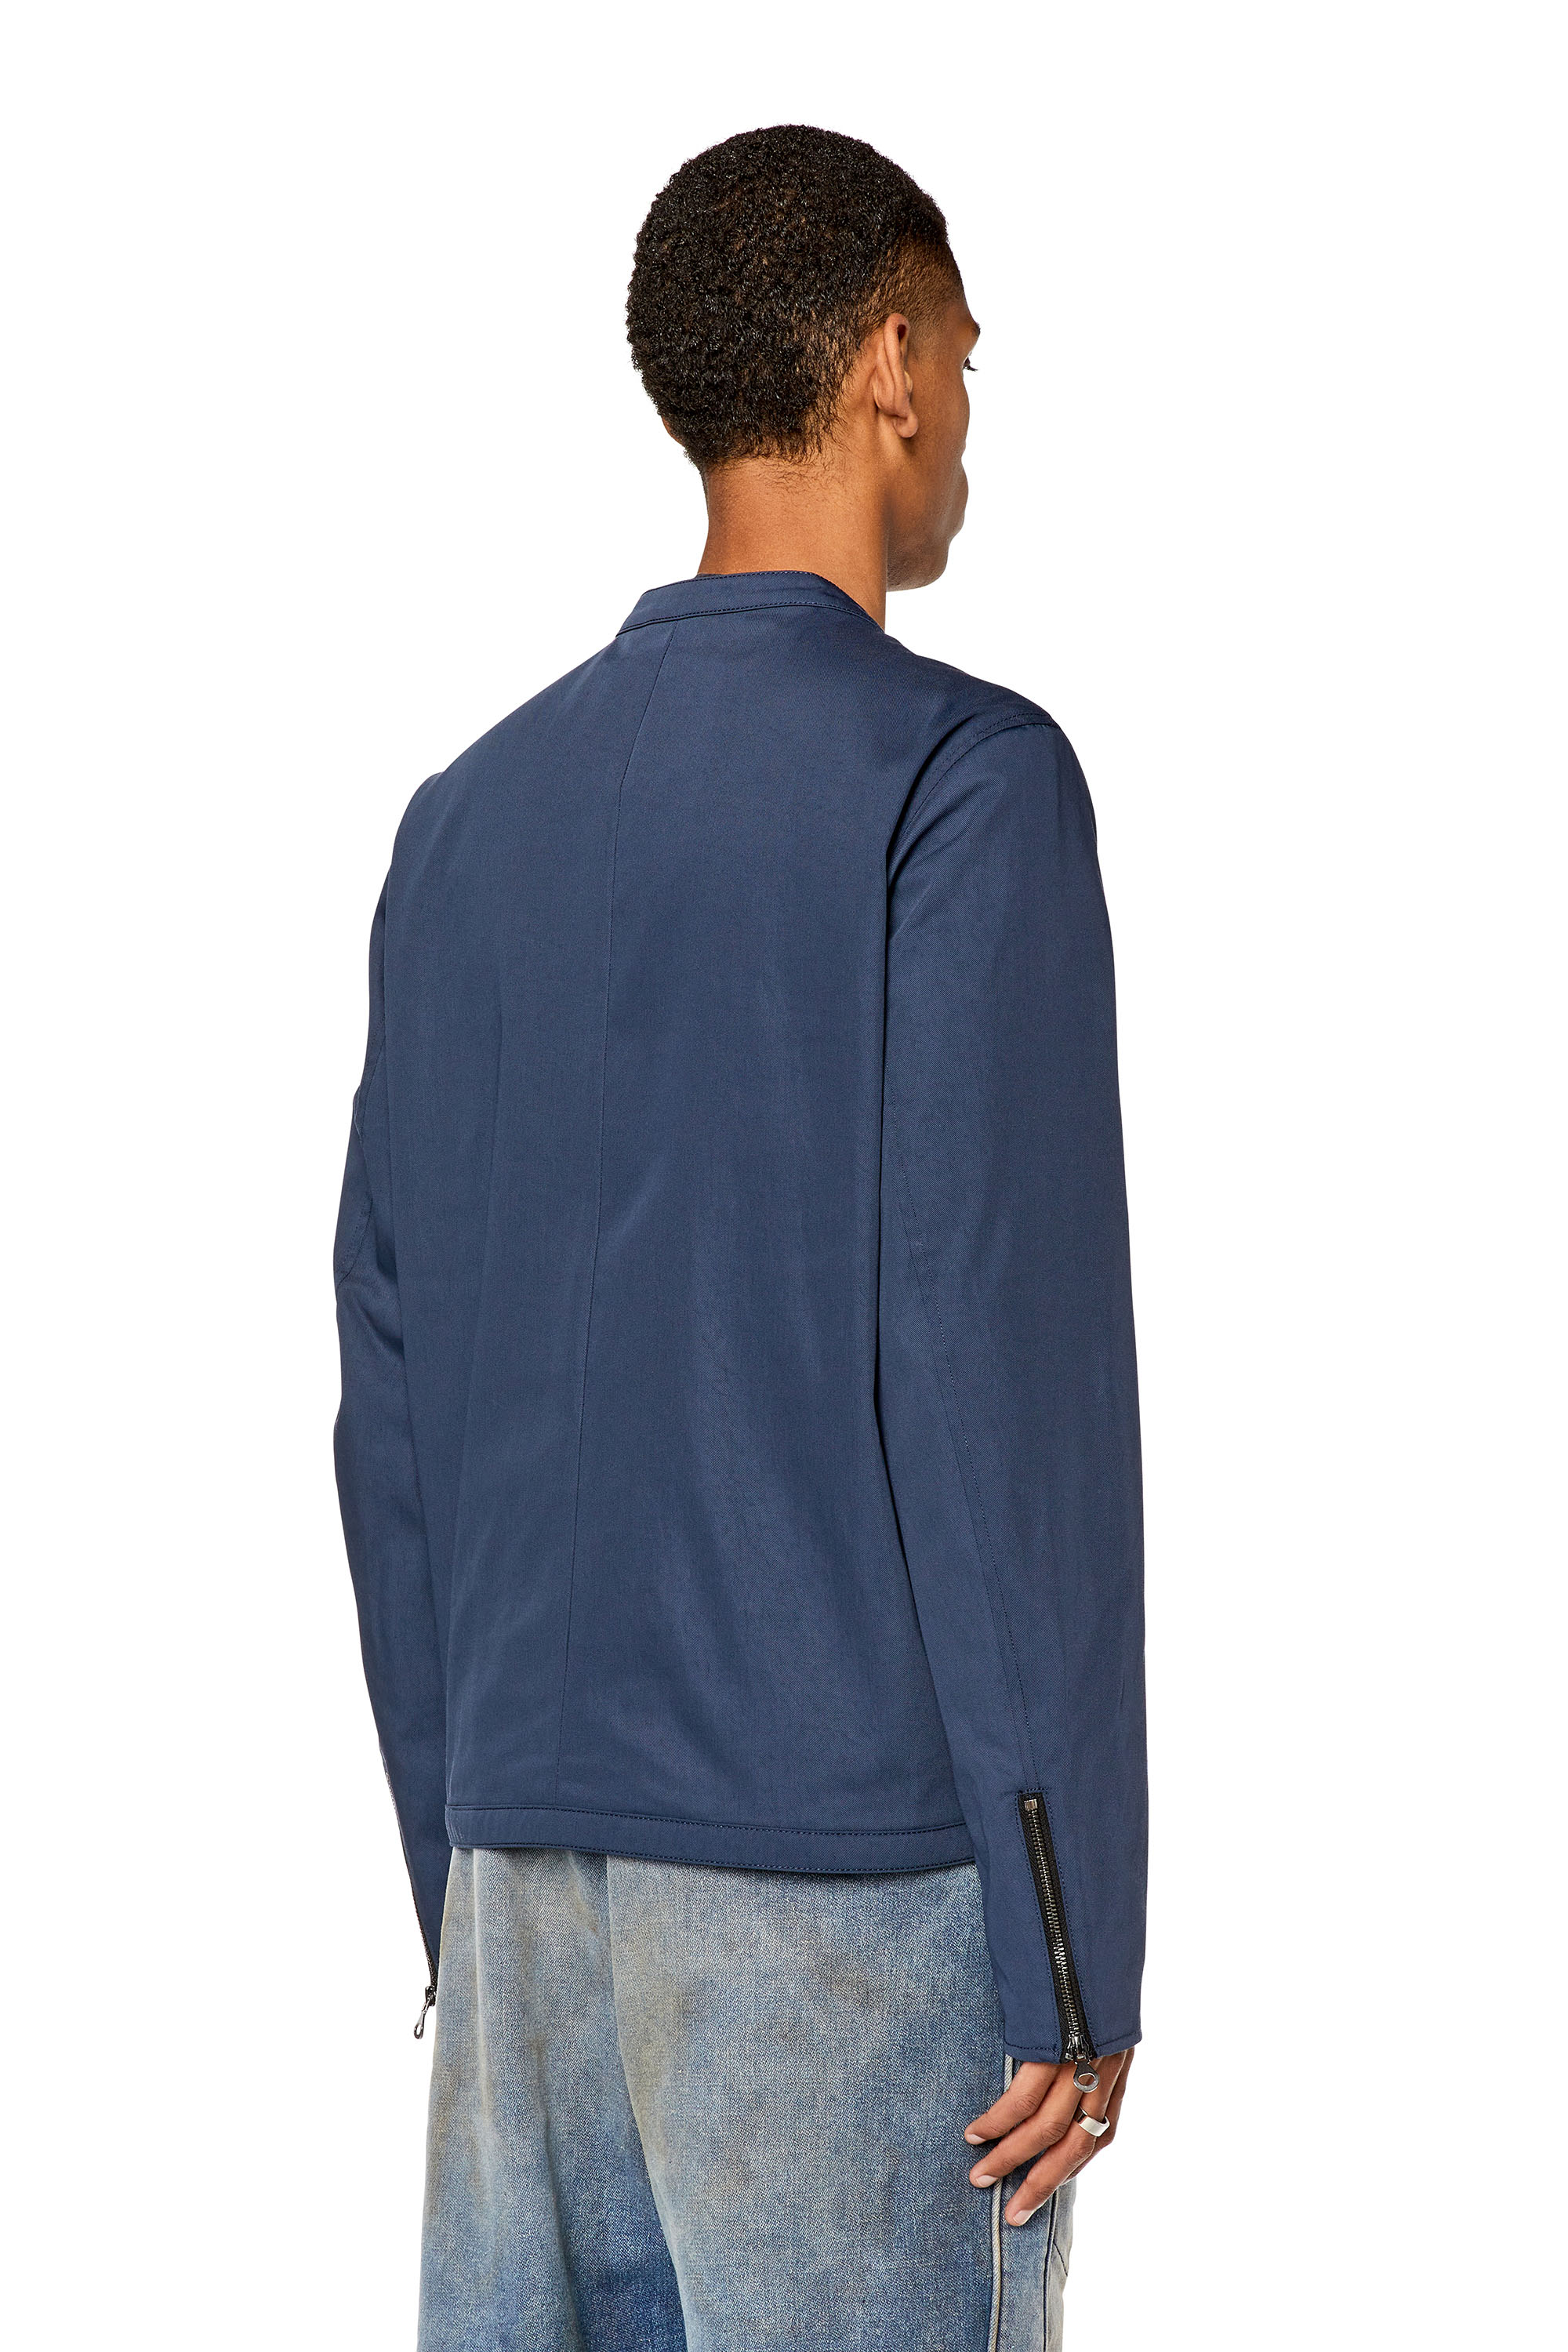 Diesel - J-GLORY-NW, Man Biker jacket in cotton-touch nylon in Blue - Image 4